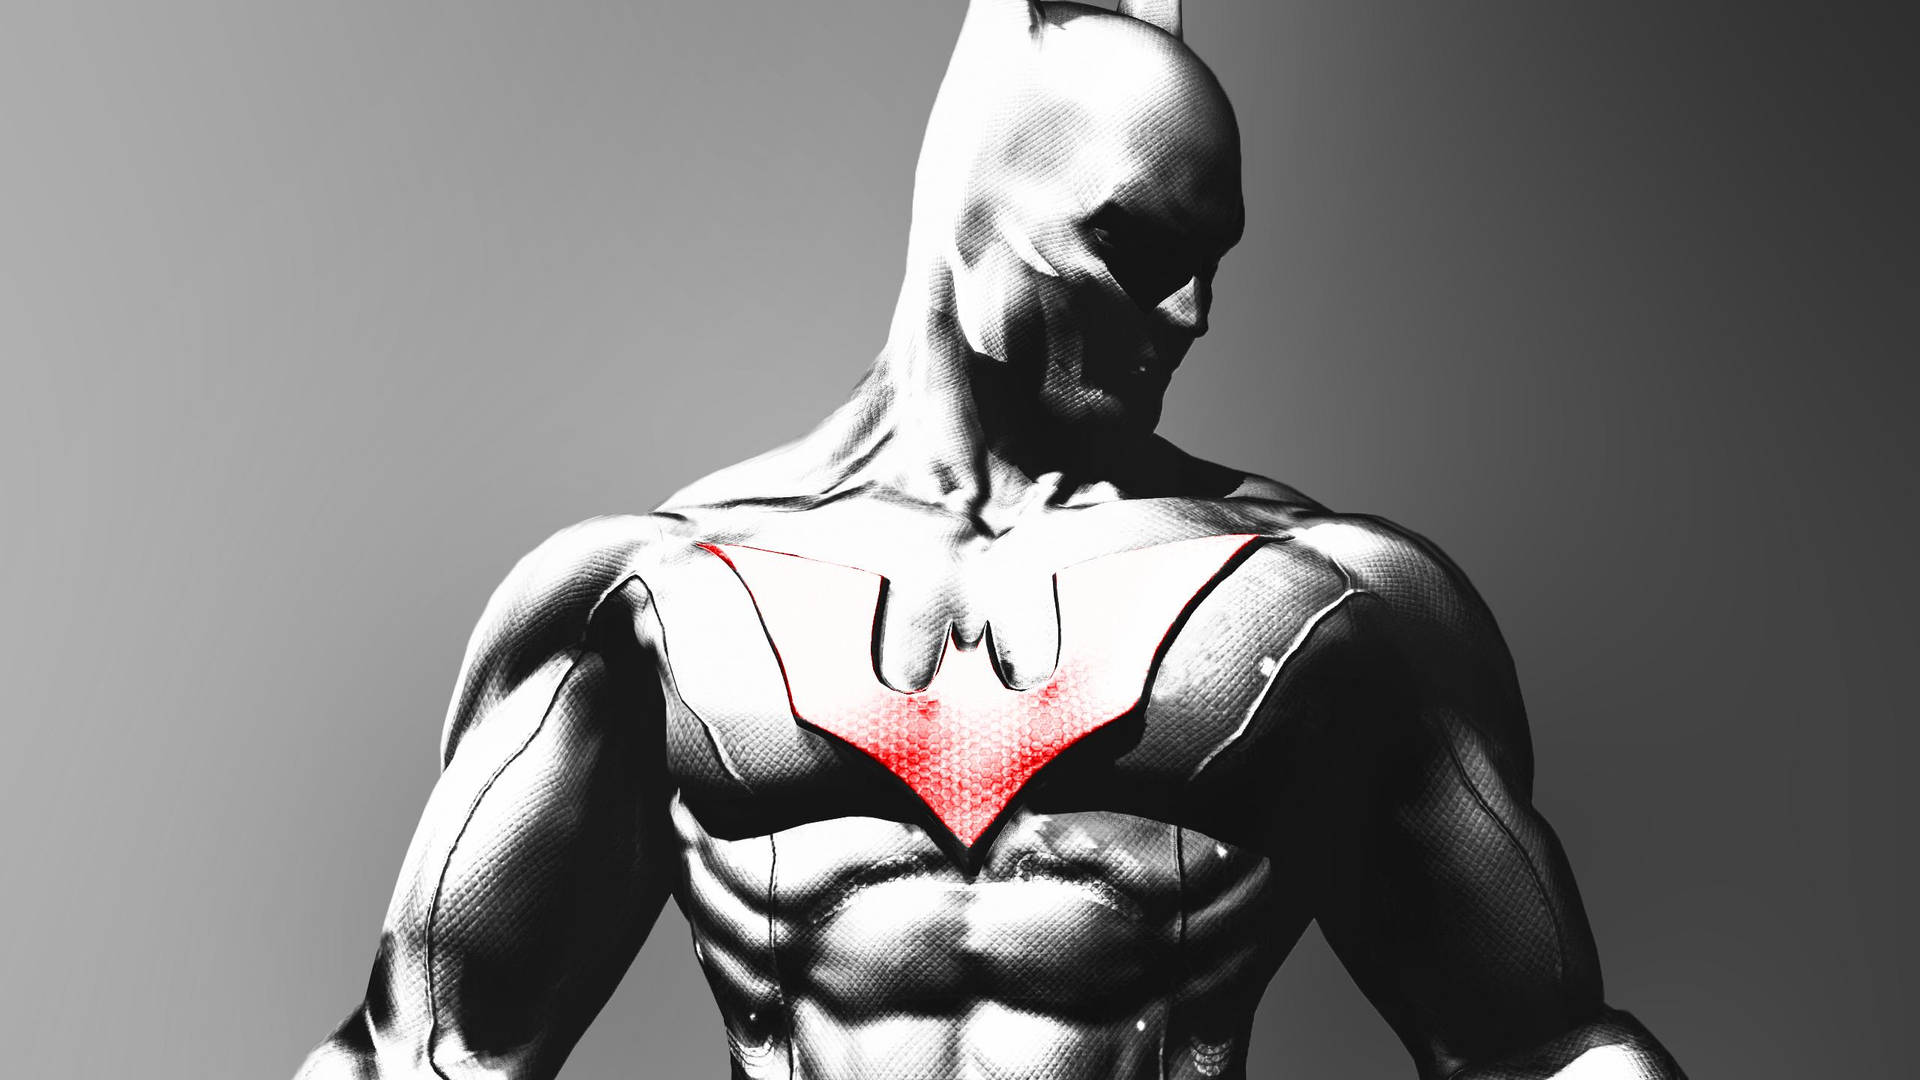 Grey Batman Beyond Action Figure Background